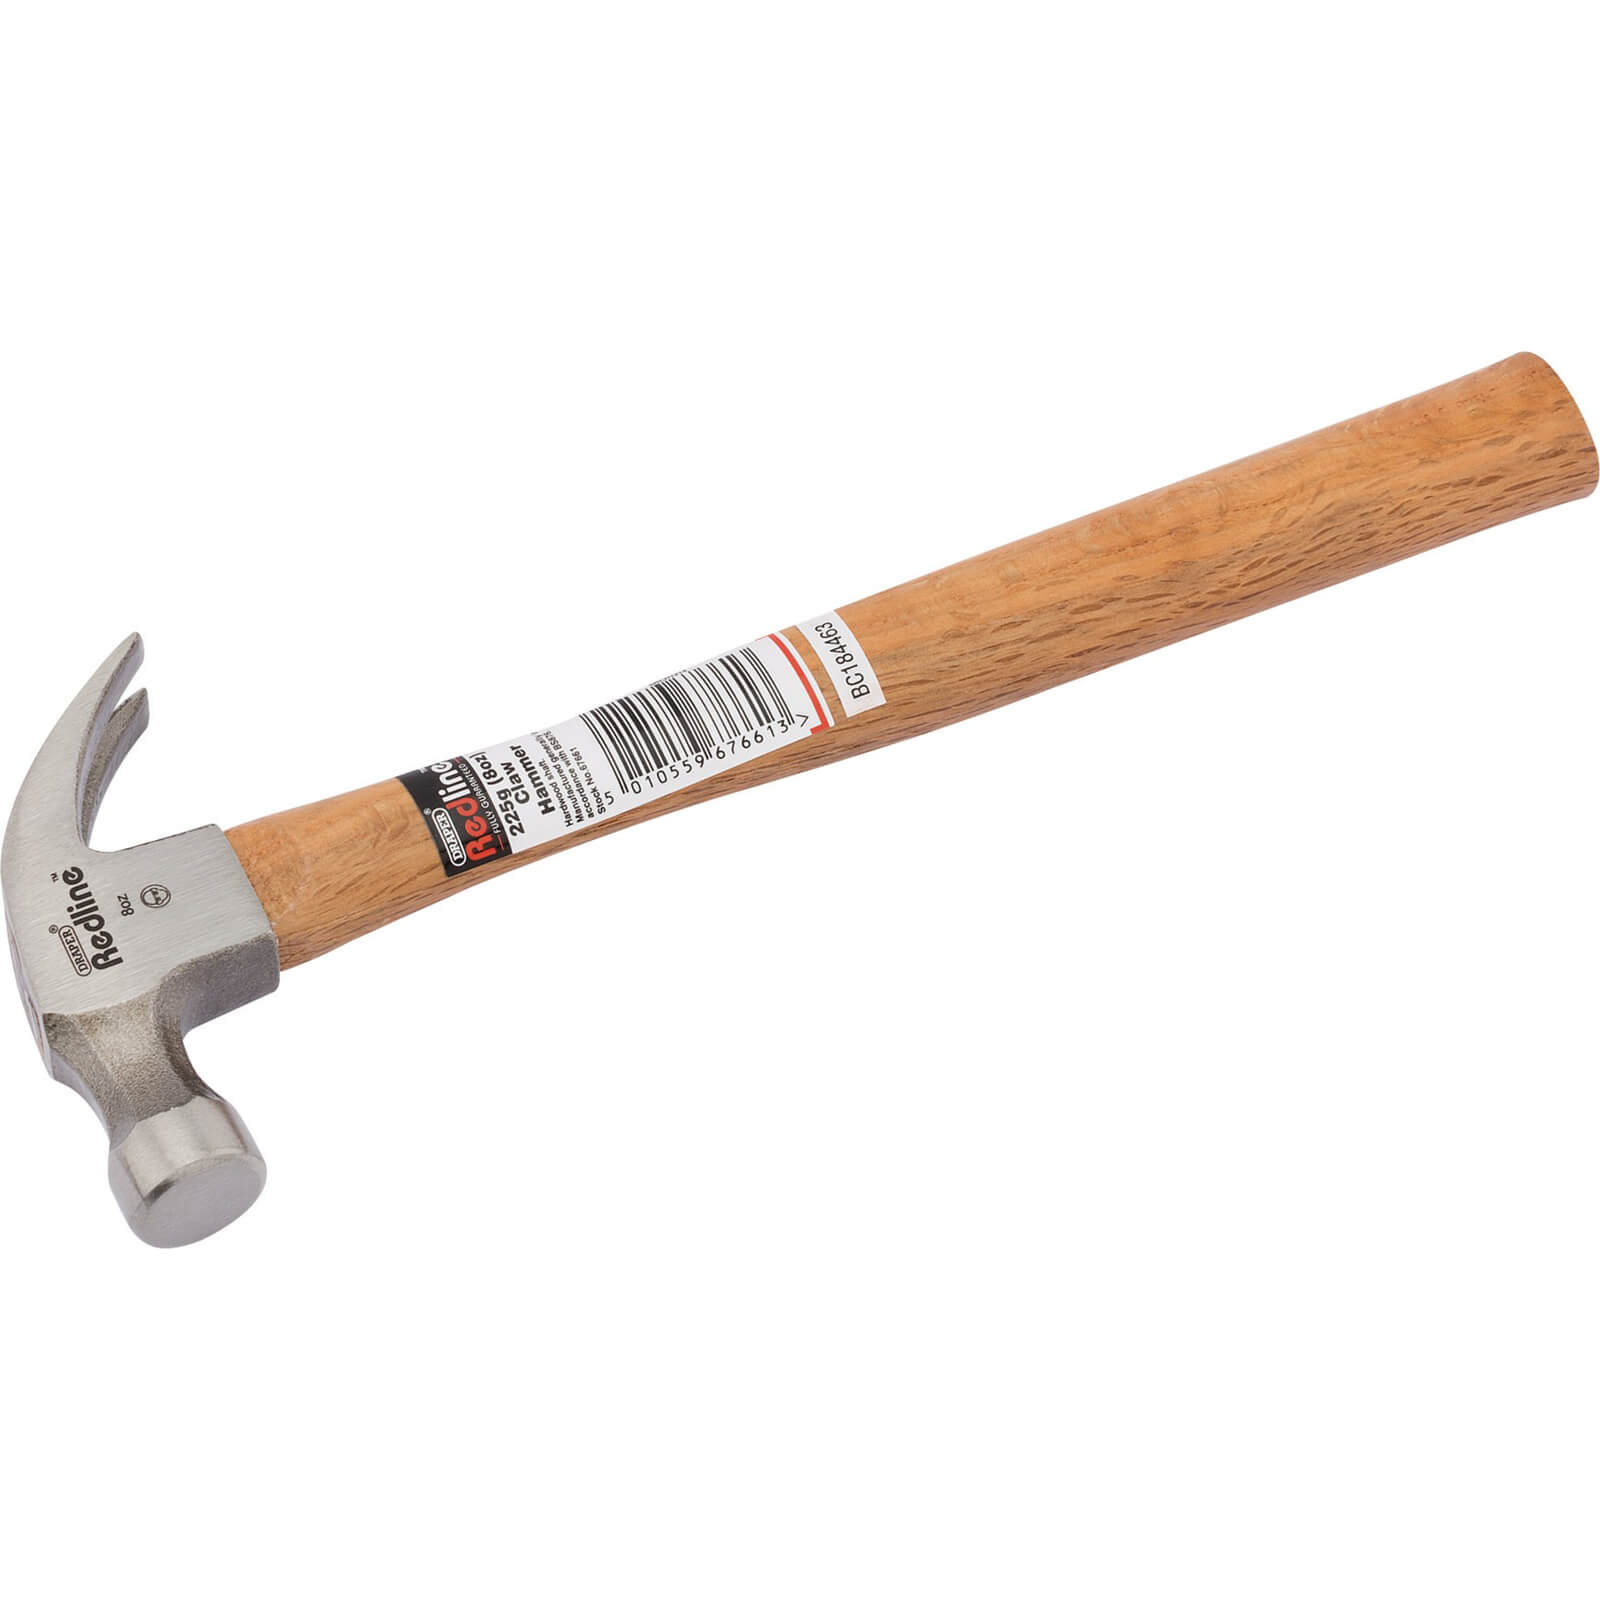 Image of Draper Hardwood Shaft Claw Hammer 225g